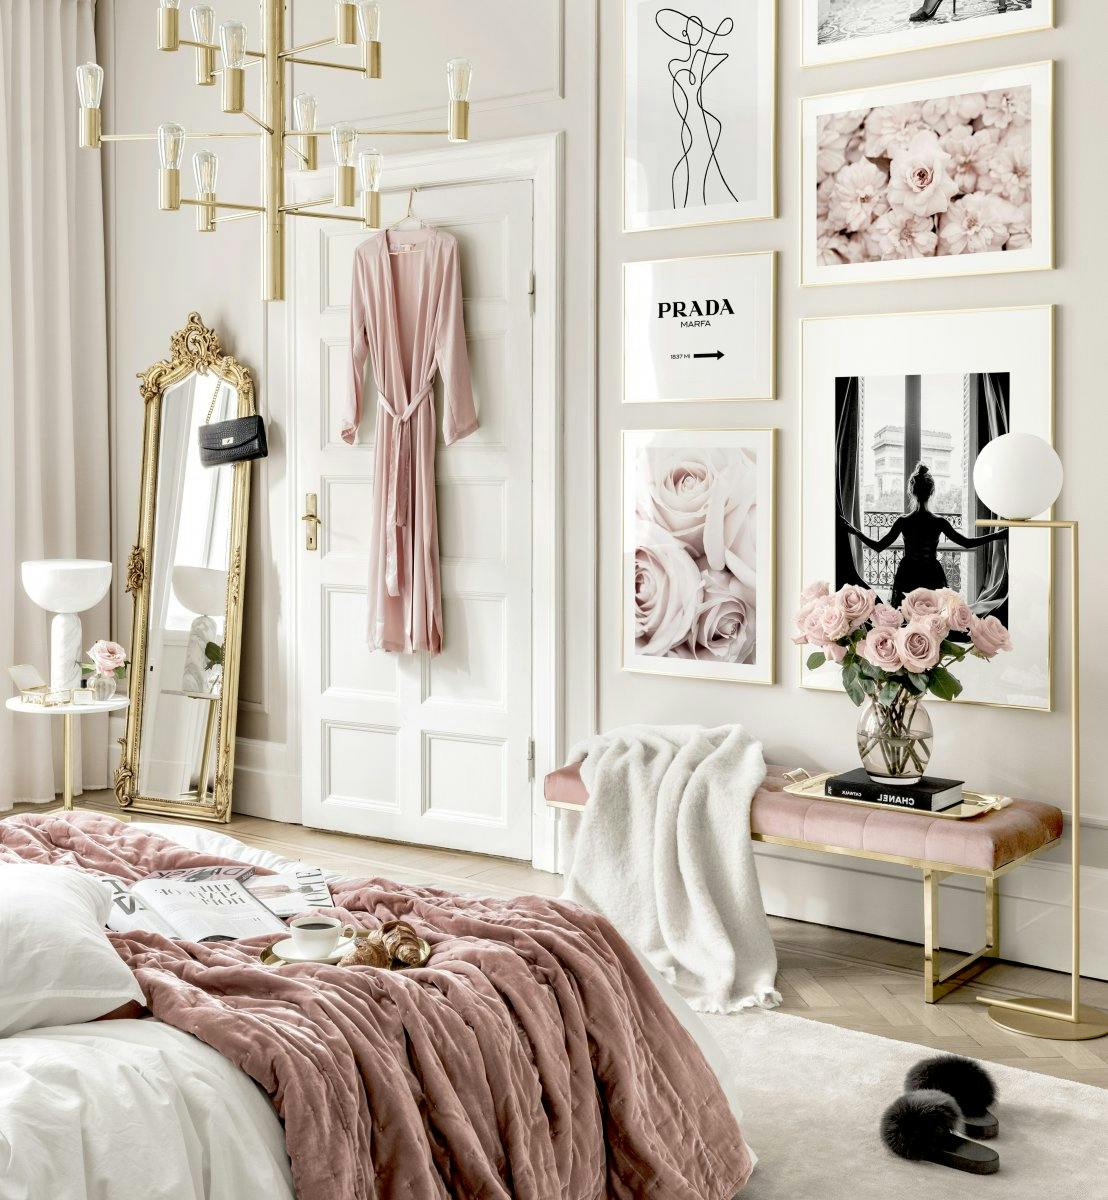 Dormitor fashion tablouri alb negru rame aurii